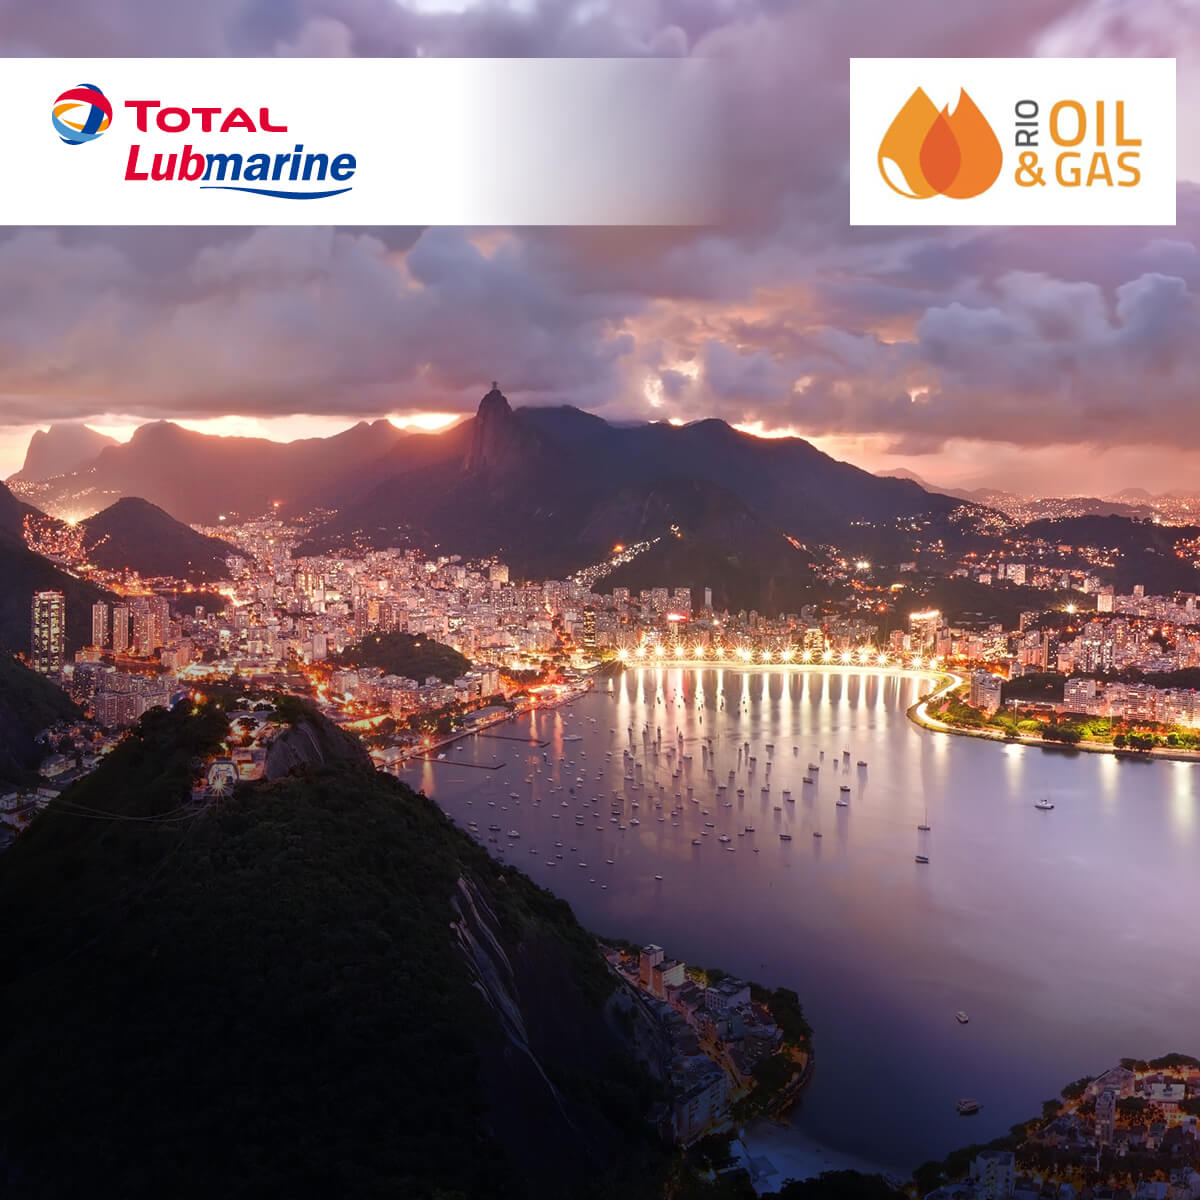 Rio Oil & Gas 2018 Review - Total Lubmarine